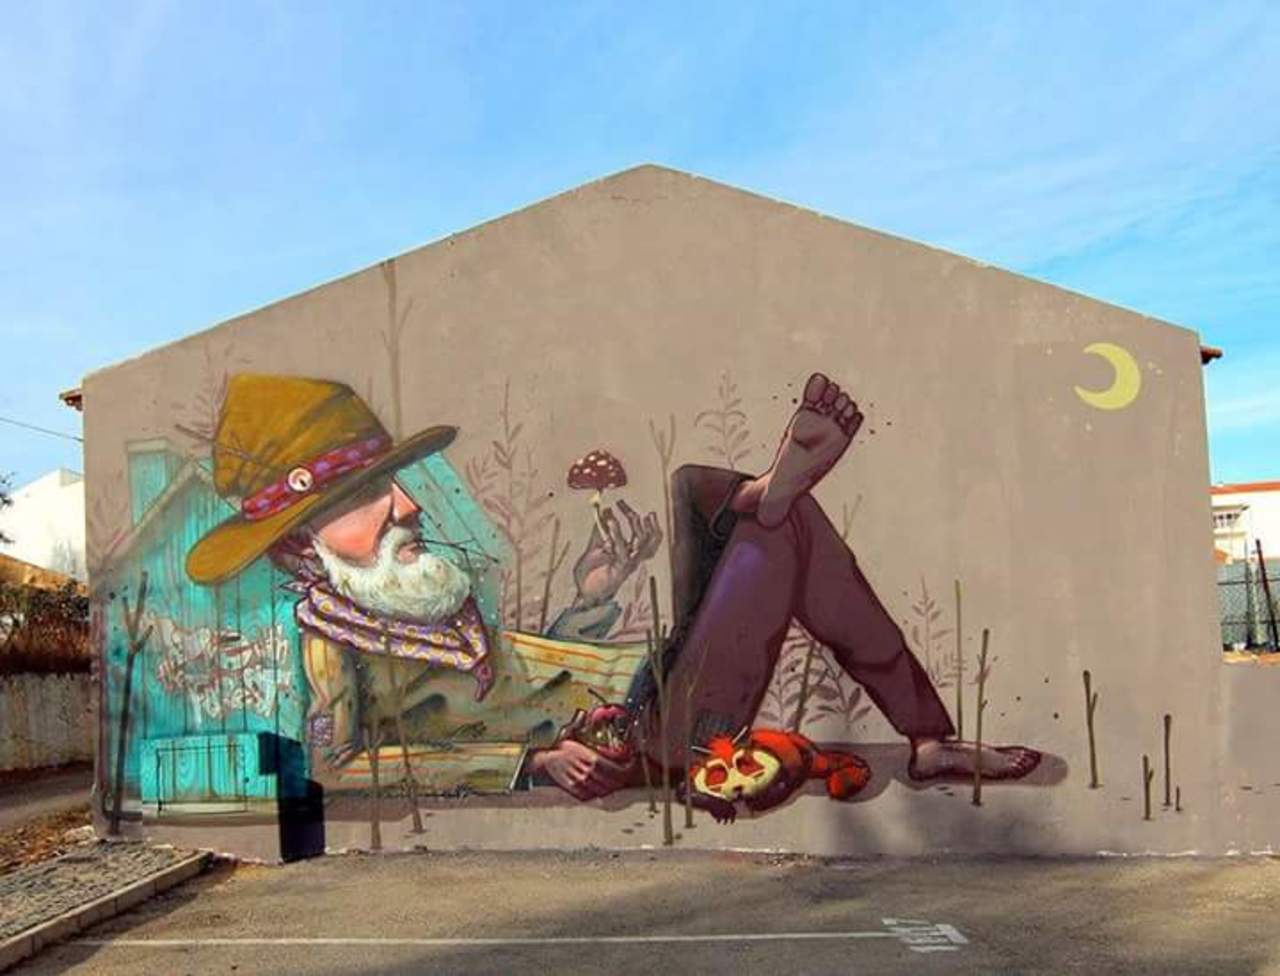 RT @hypatia373: #art #streetart #graffiti 
#MrWoodland https://t.co/8J6gijvWX2